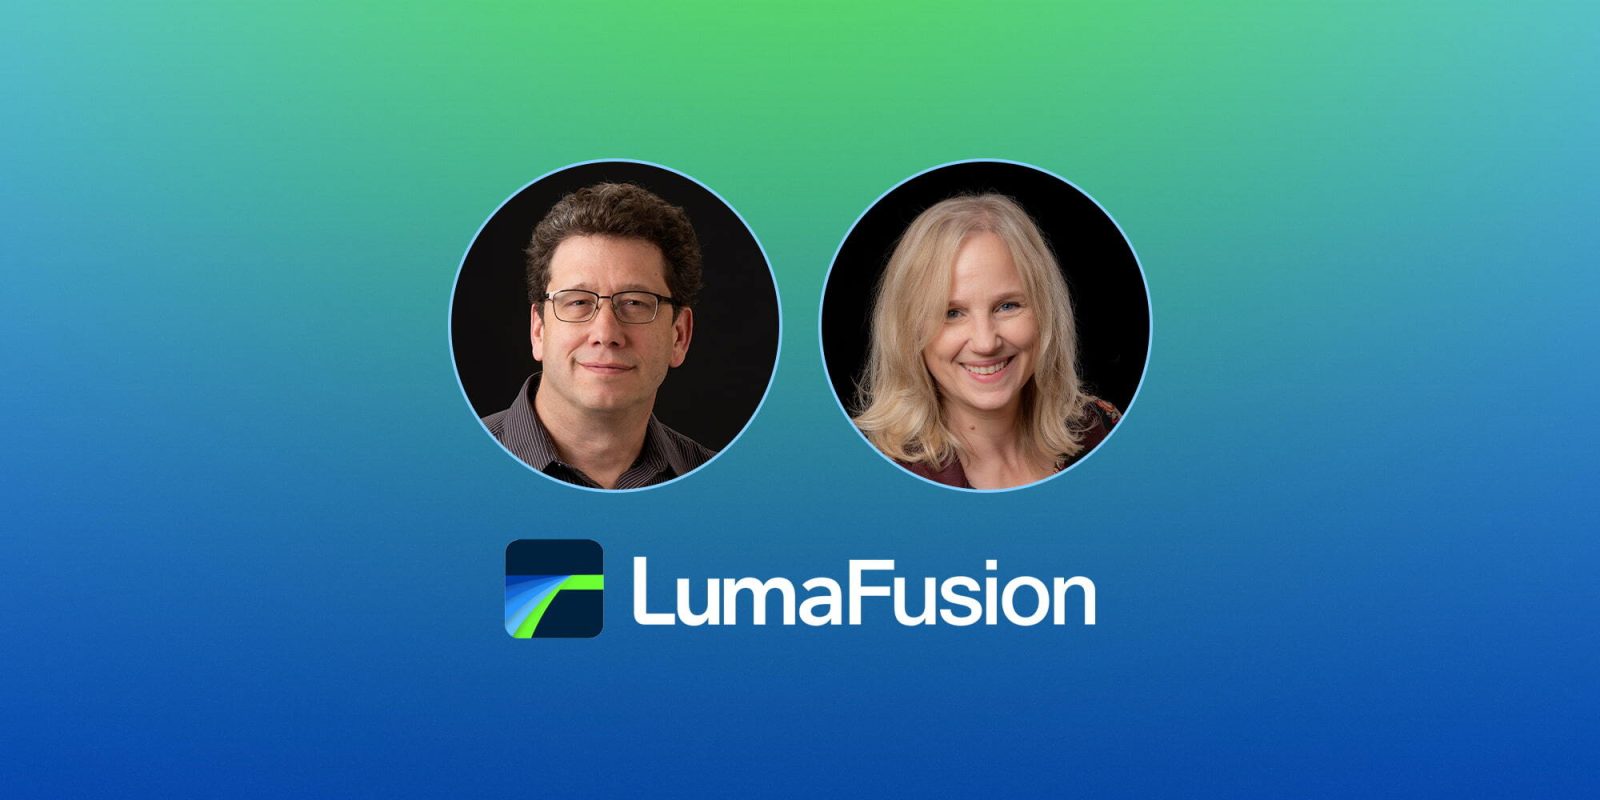 LumaFusion creators Terri Morgan and Chris Demiris